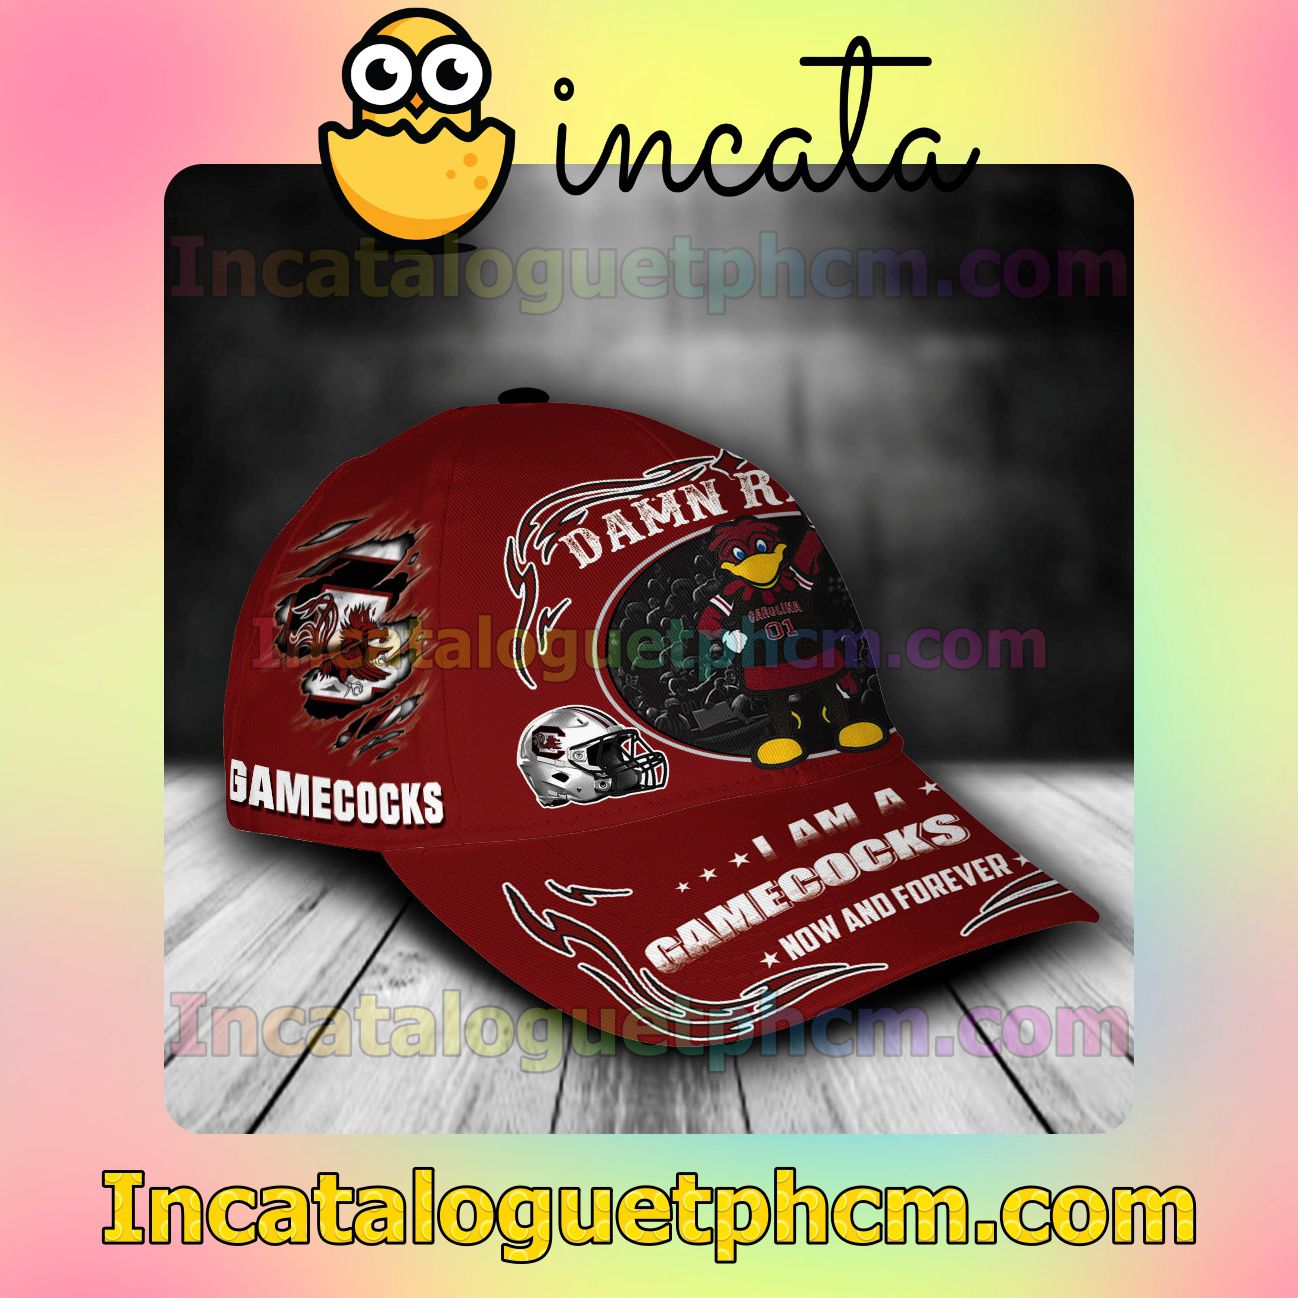 Sale Off South Carolina Gamecocks Mascot NCAA Customized Hat Caps